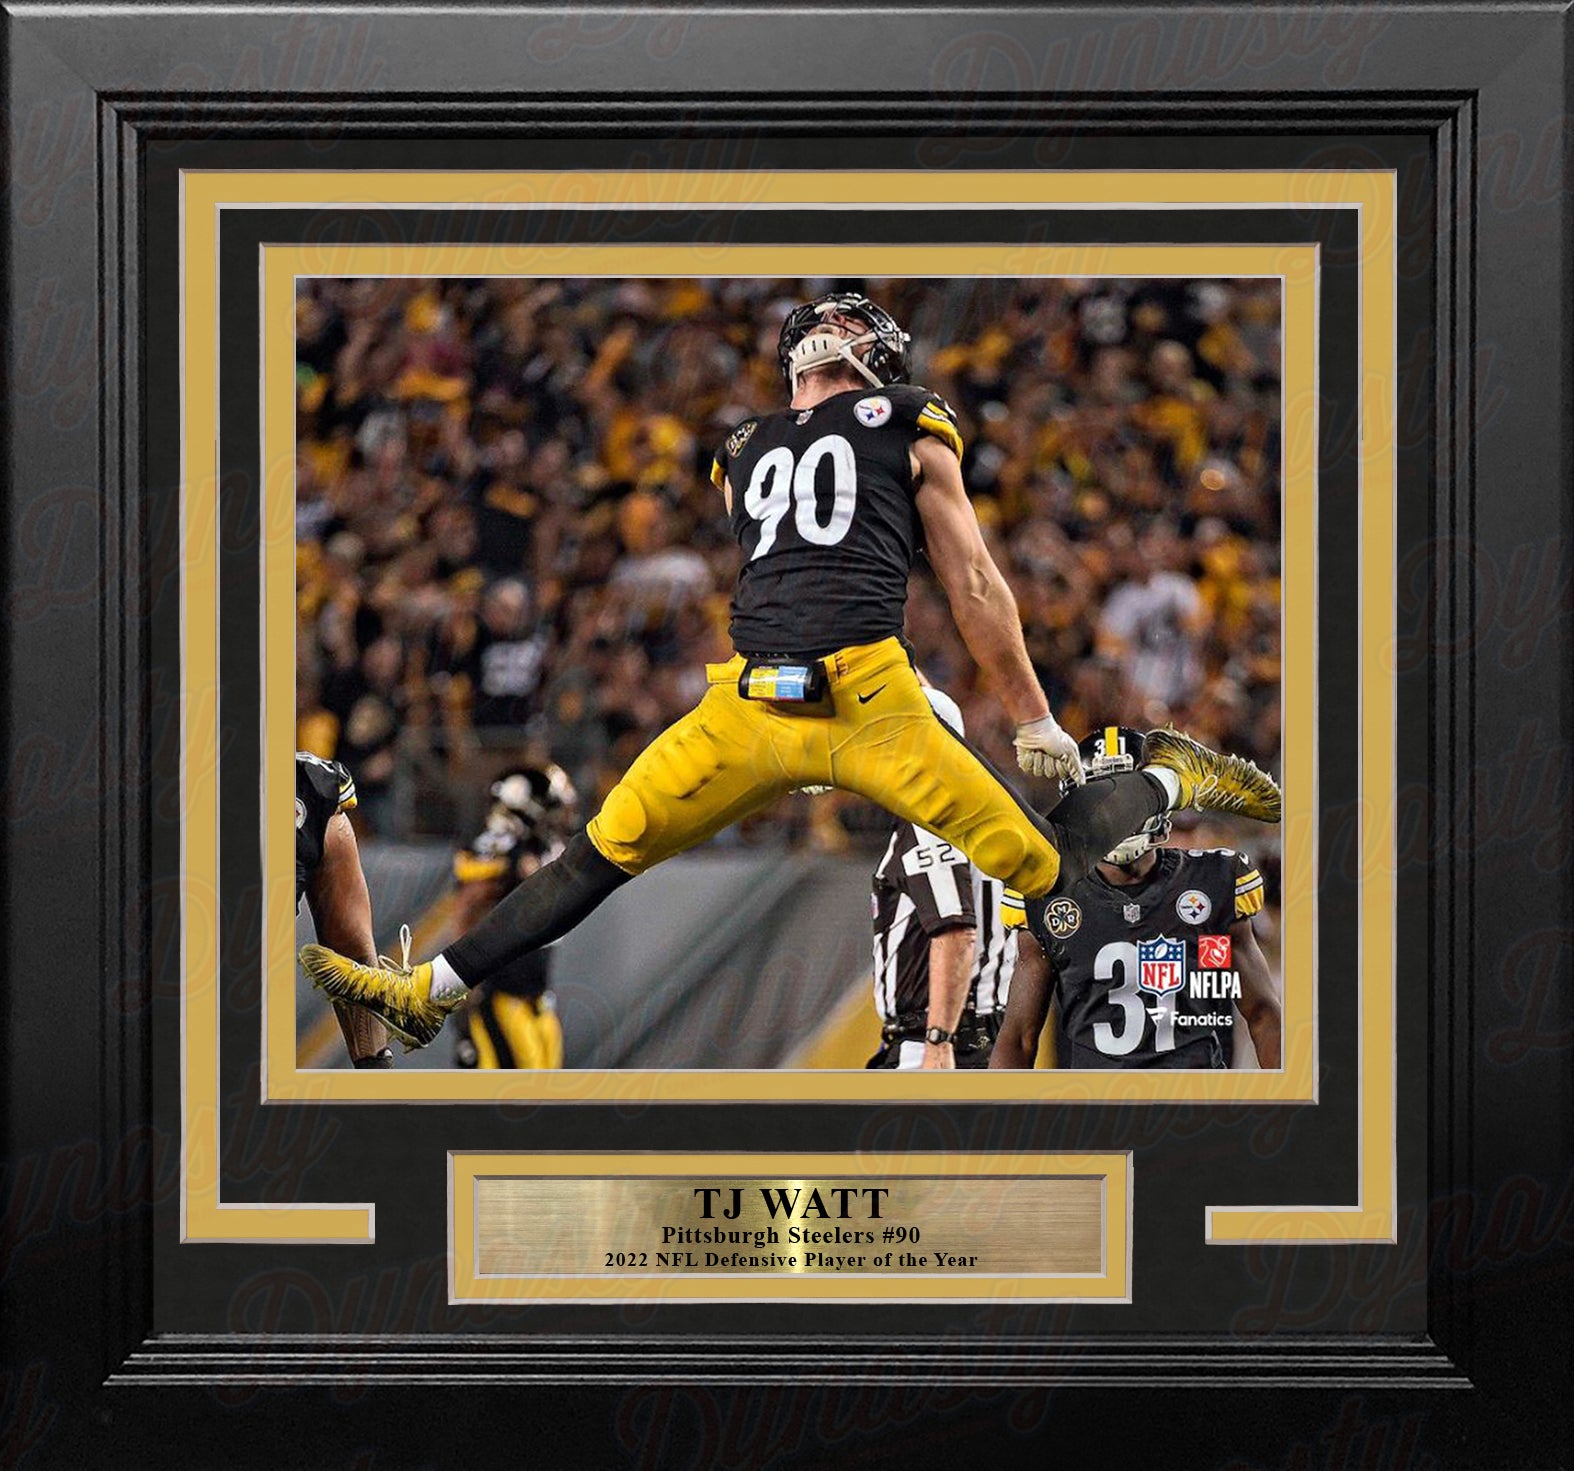 TJ Watt Celebration Pittsburgh Steelers 8" x 10" Framed Football Photo - Dynasty Sports & Framing 